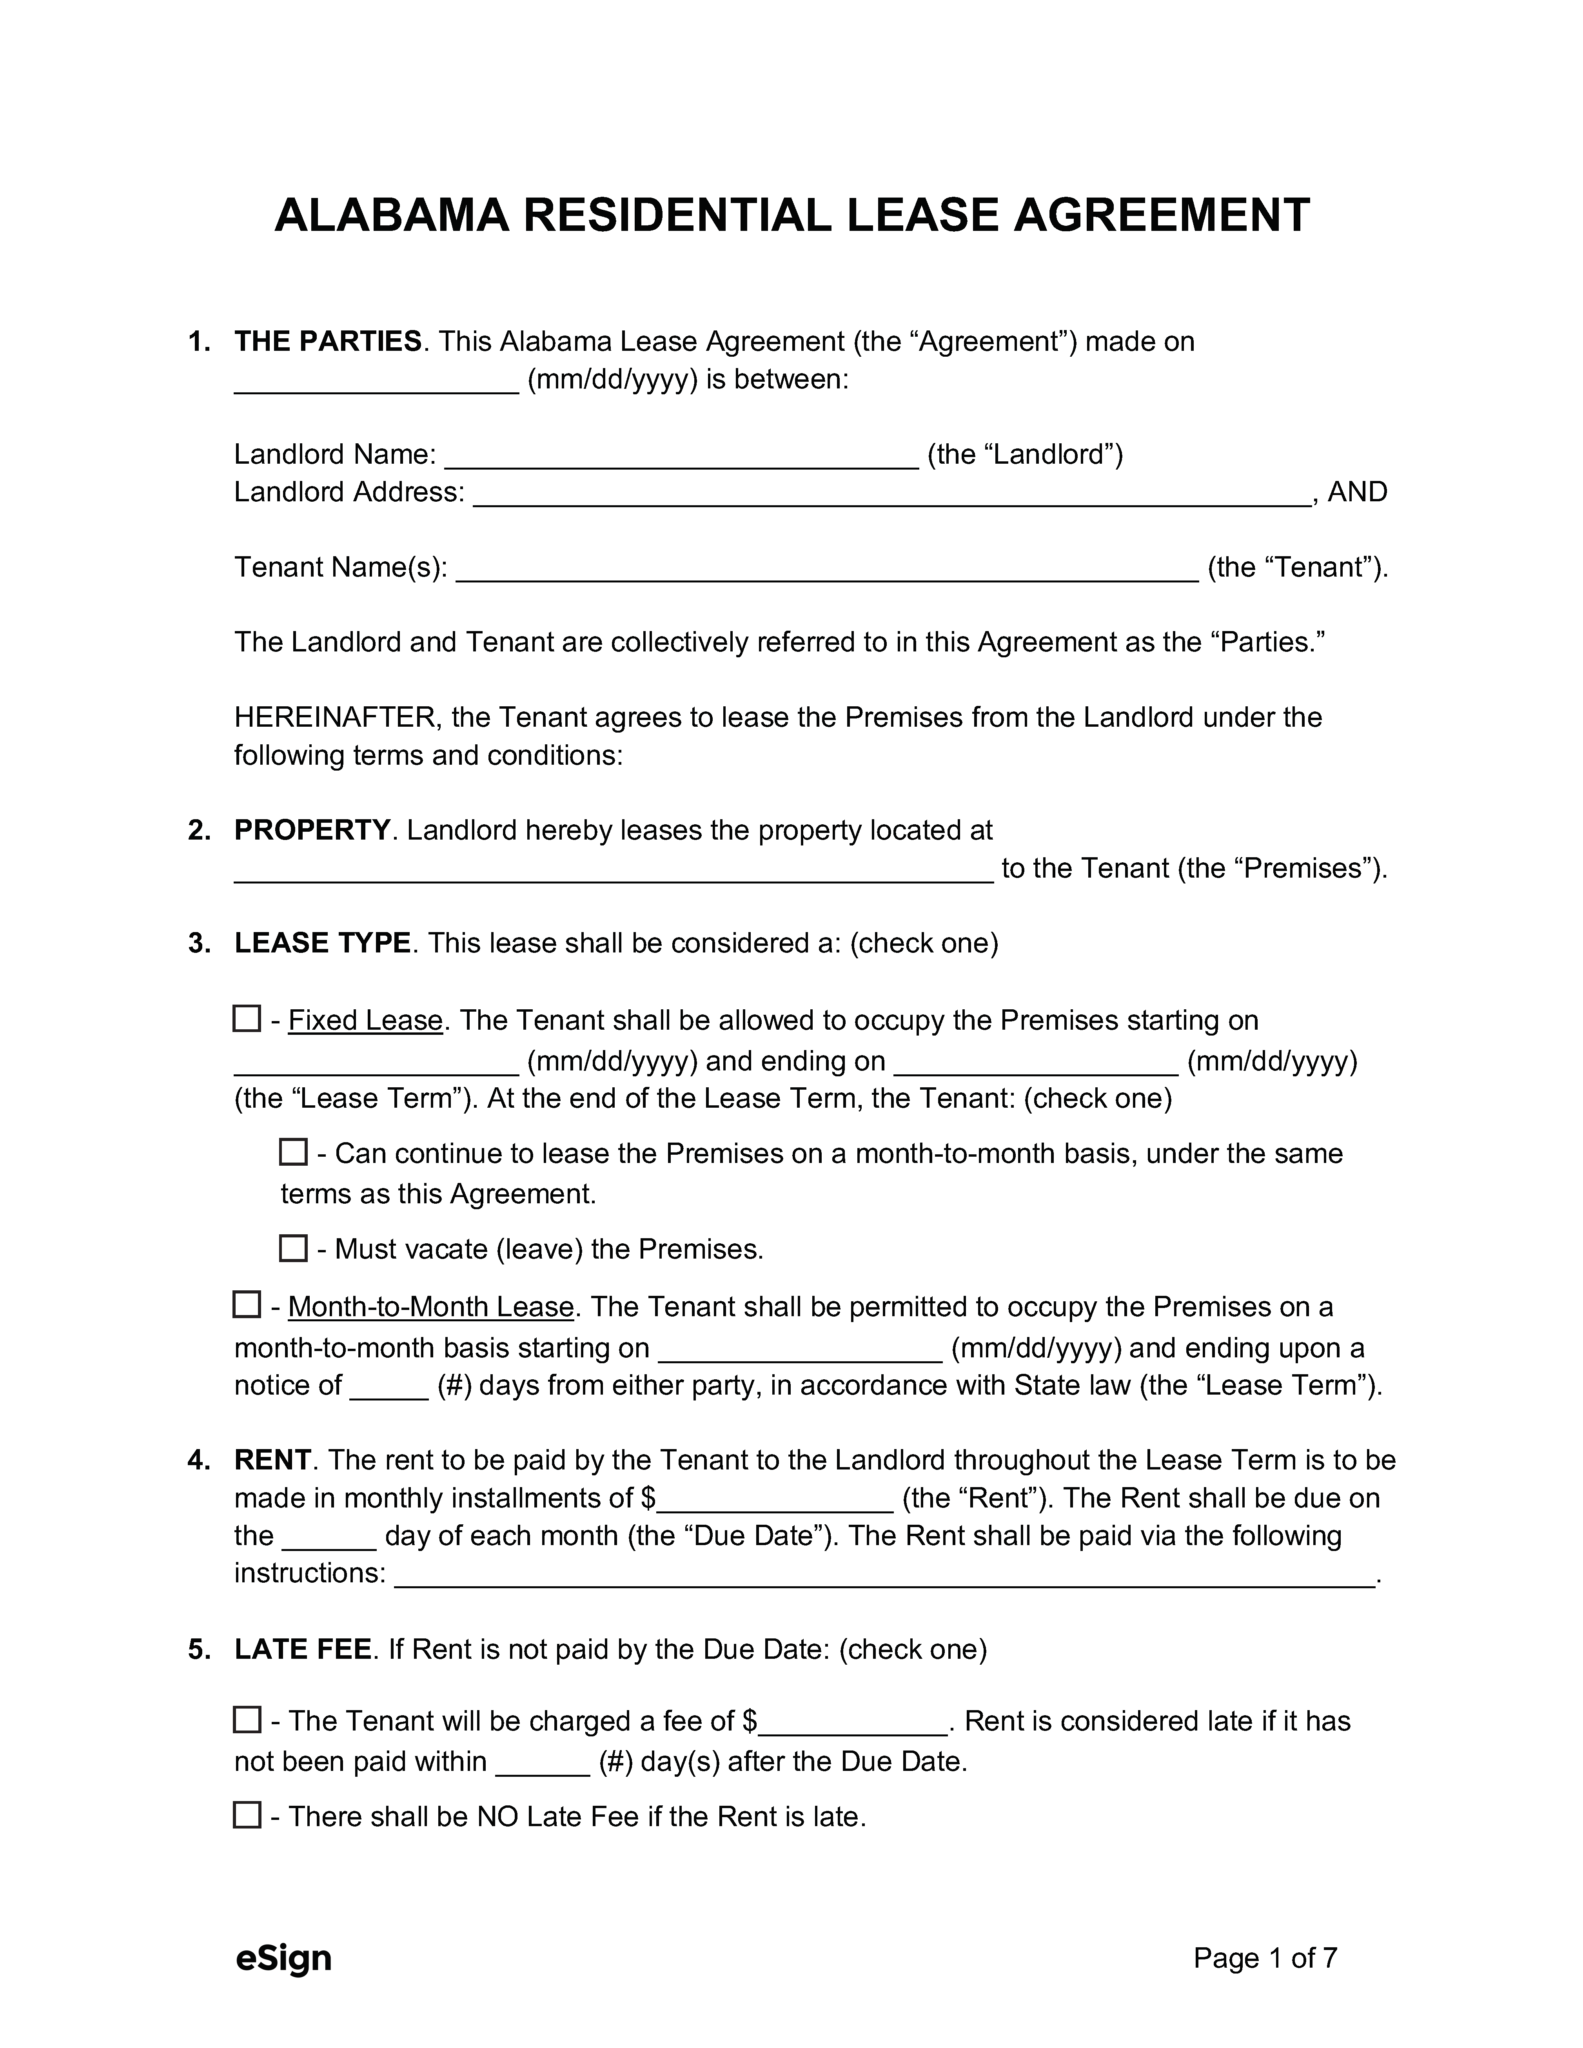 free-alabama-rental-lease-agreement-templates-6-pdf-word